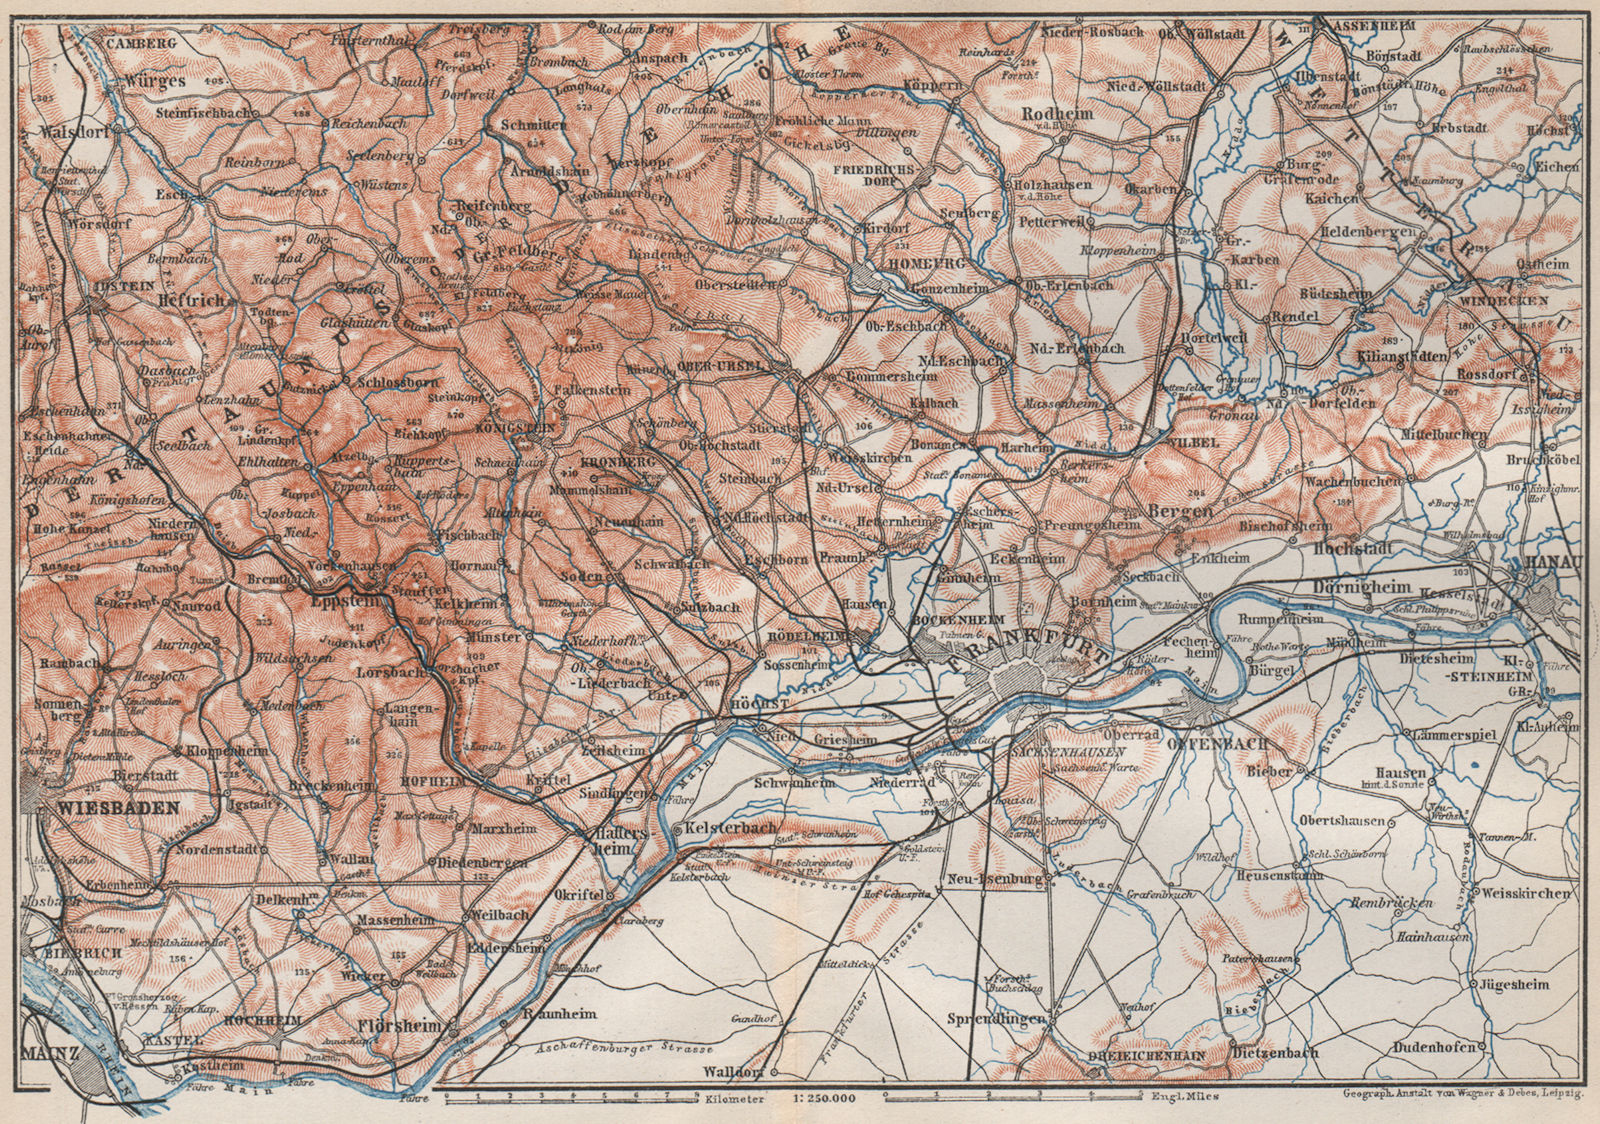 Associate Product TAUNUS Mountains. Wiesbaden Frankfurt am Main Hanau. Deutschland karte 1889 map